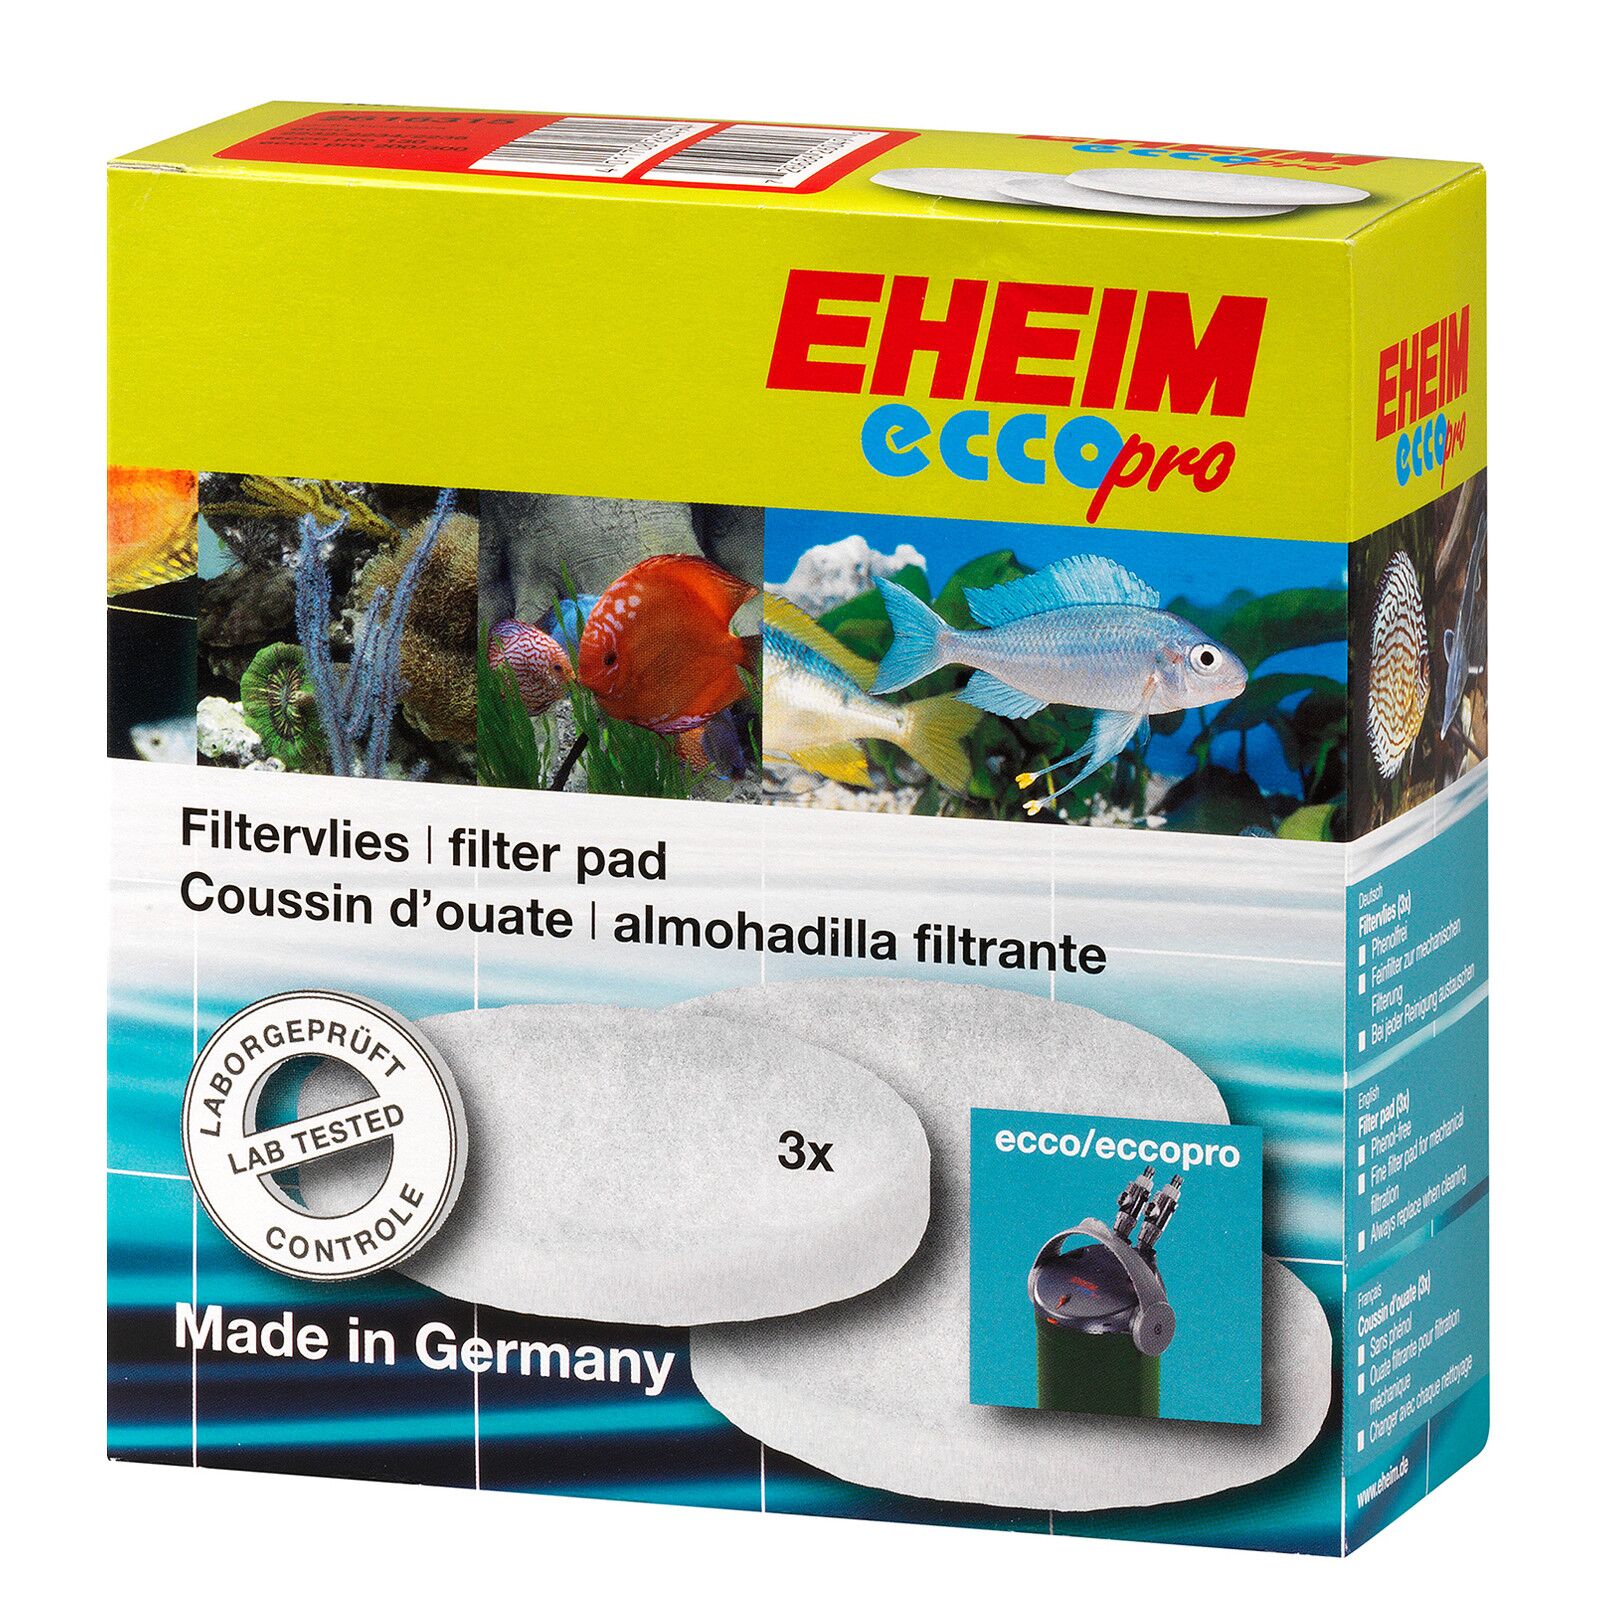 EHEIM - Filtervlies  Aquasabi - Aquascaping Shop